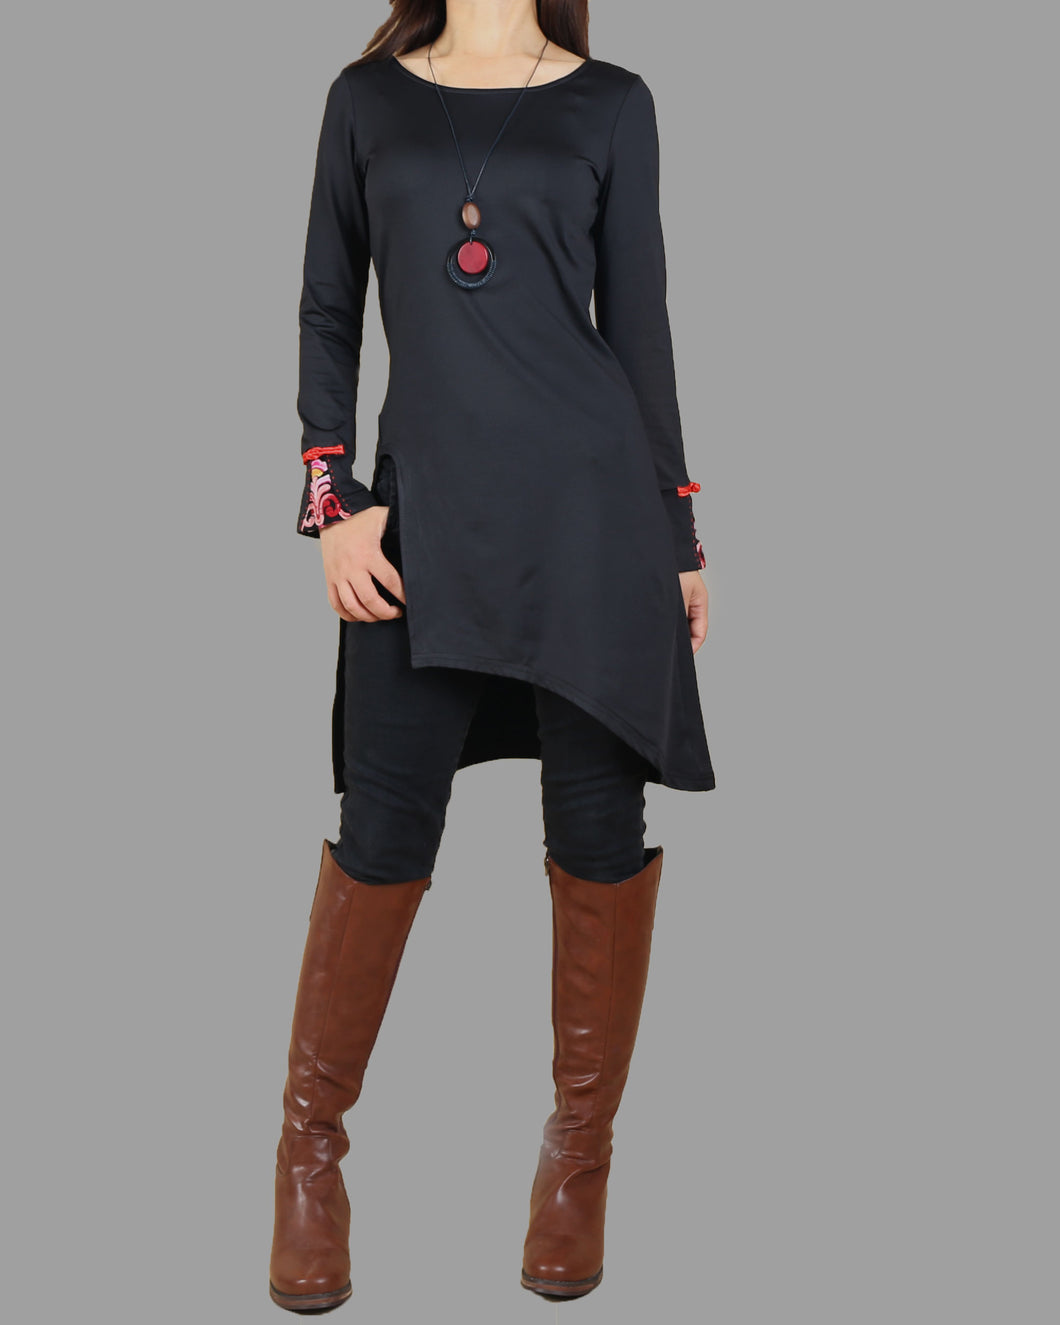 Women's Long Sleeve t-shirt/Asymmetrical Cotton tunic dress/black tunic Top/embroidered dress(Y1508)